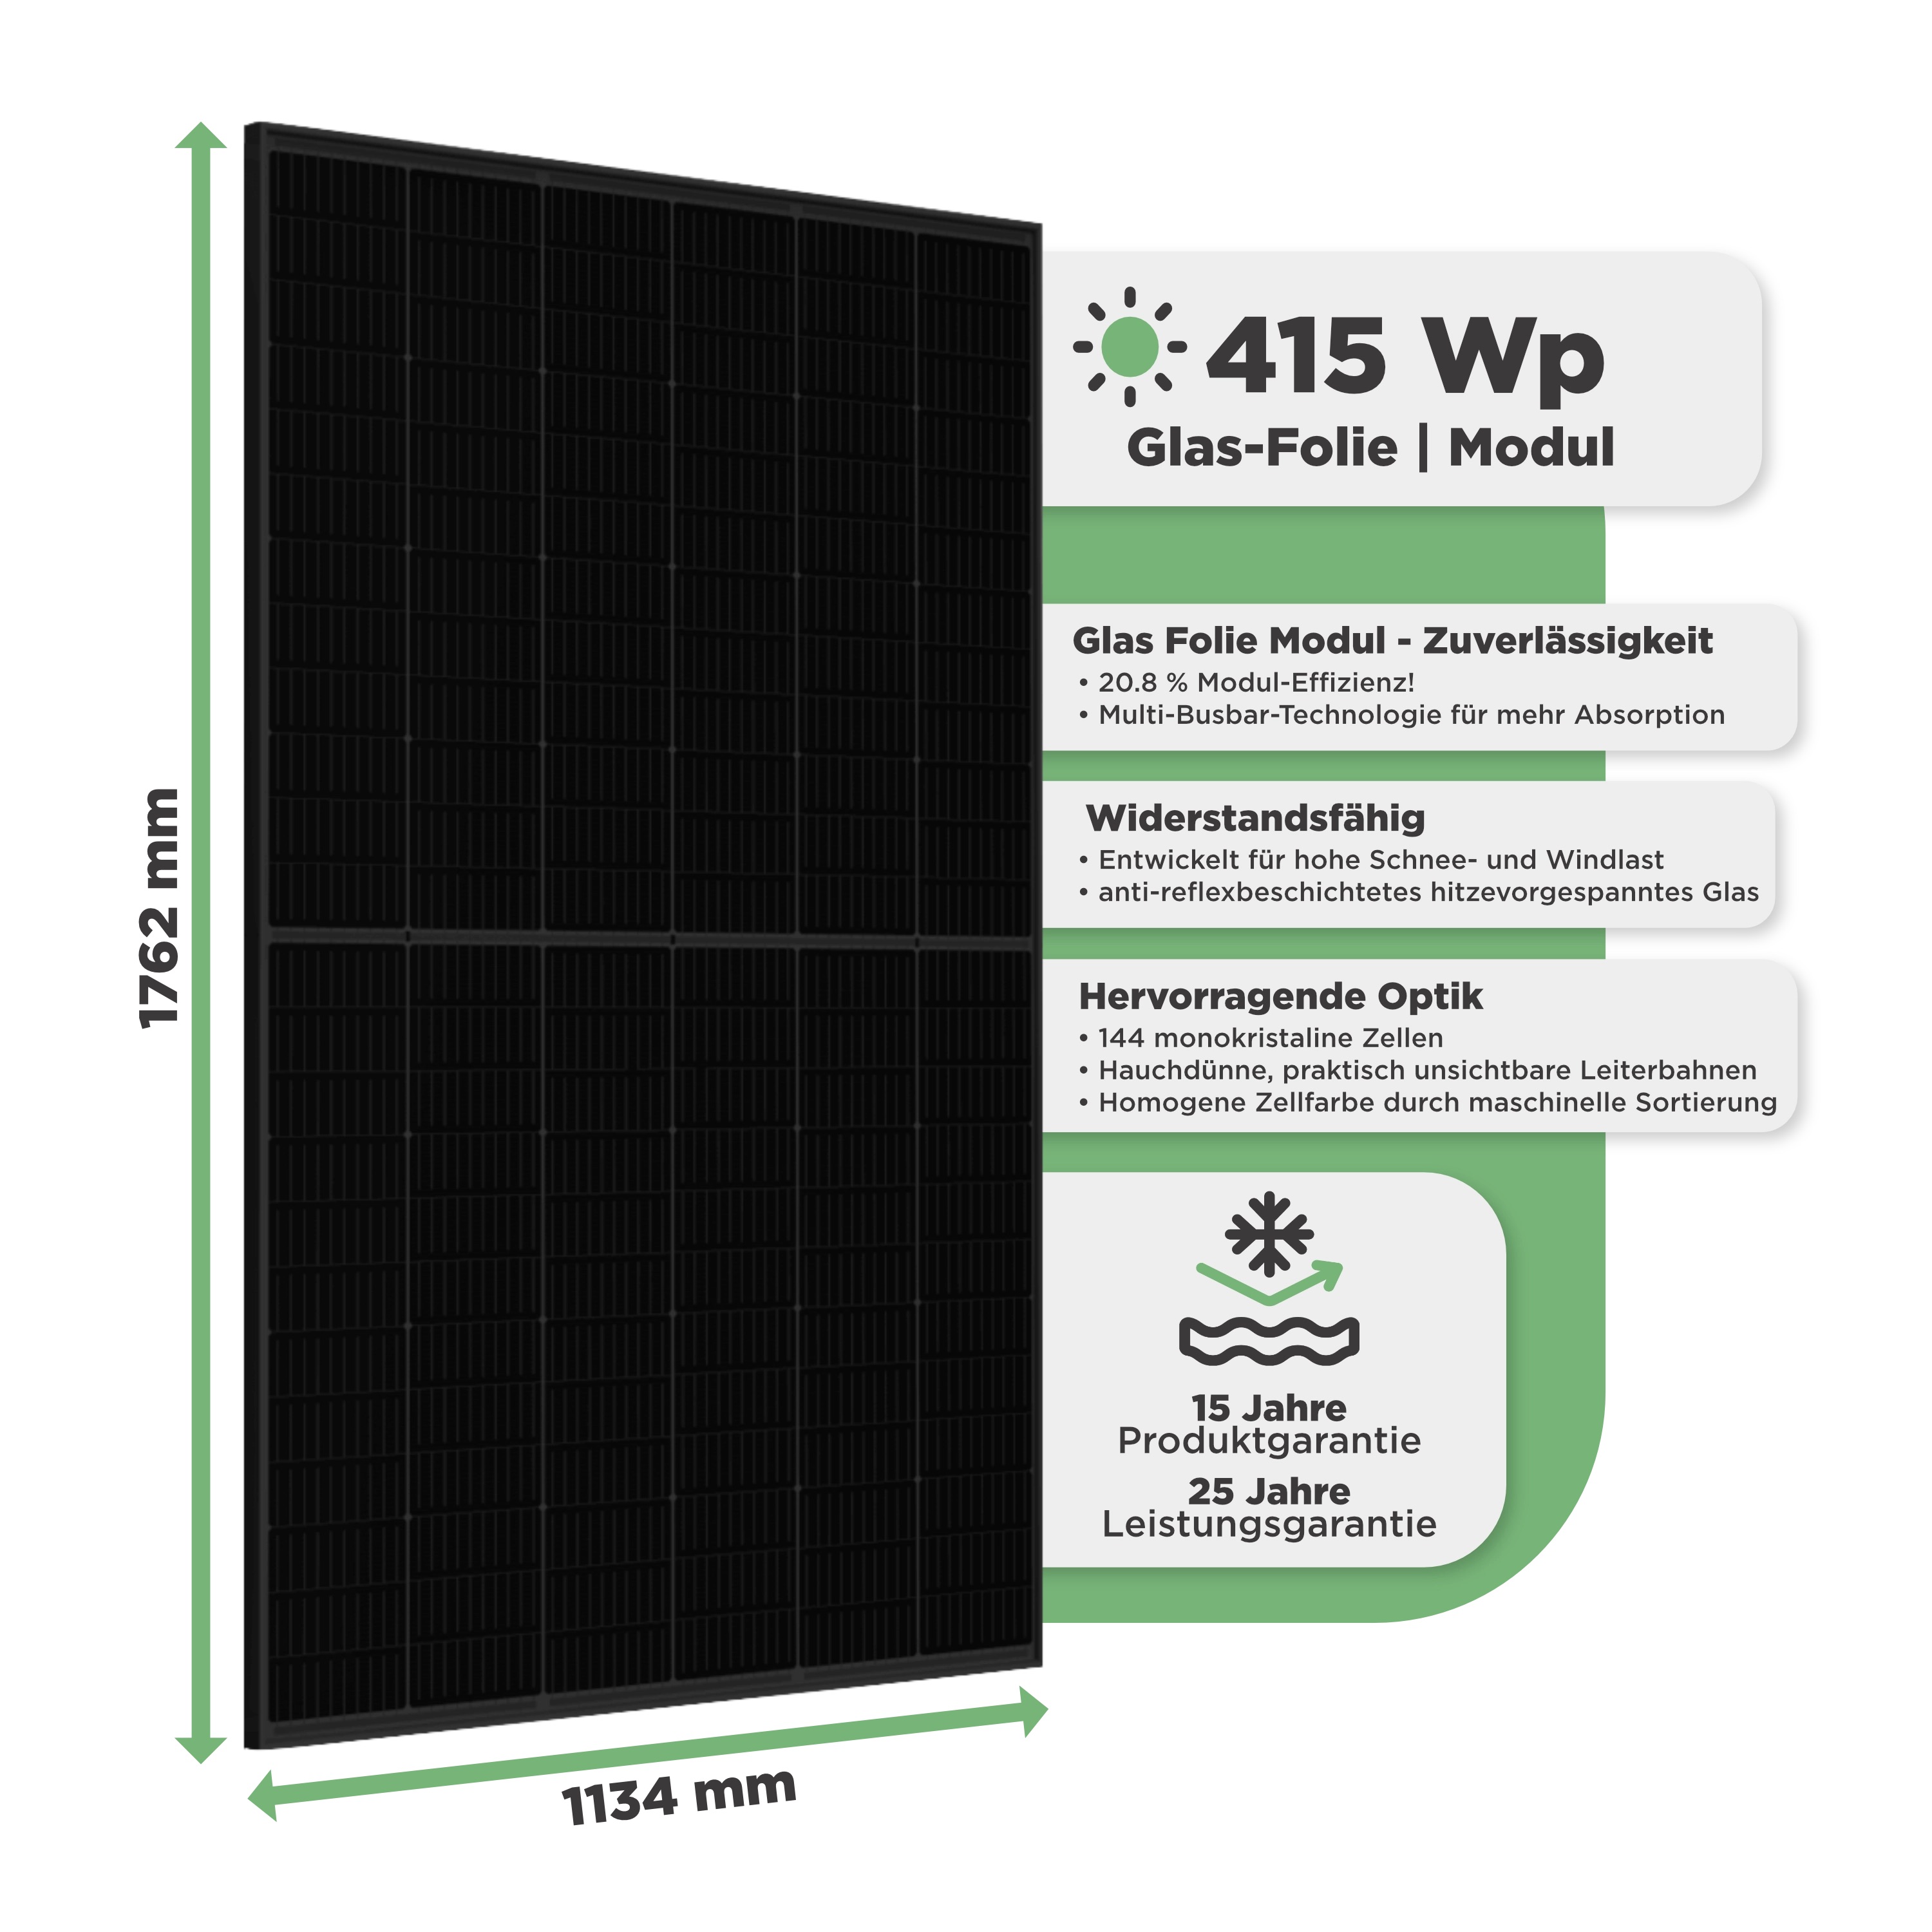 Balkonkraftwerk Wand 1660 Wp — APsystems EZ1-M 800 W / Trina Solar / 415 Wp (Full Black, Glas-Folie) / zwei Reihen quer / 4 Module / 5 m